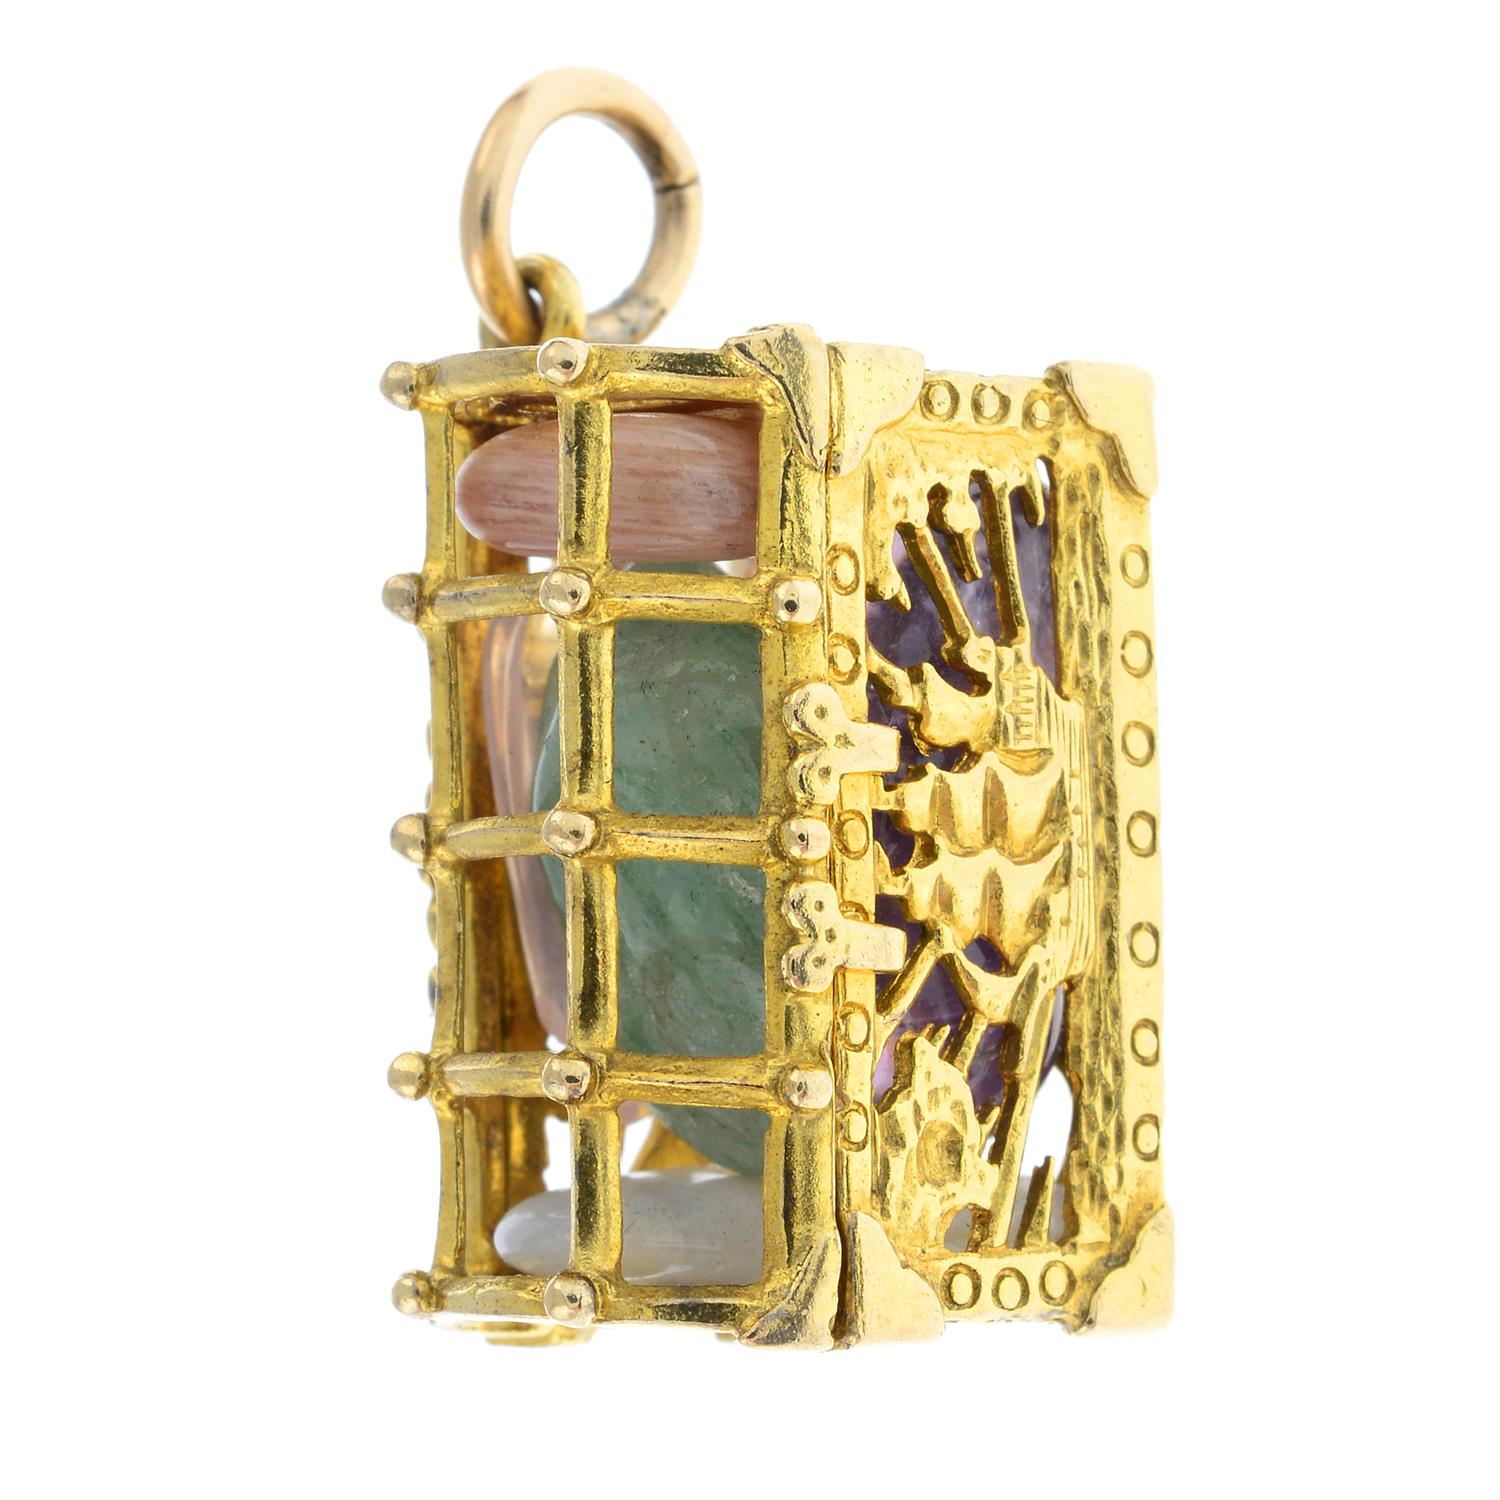 A 9ct gold tumbled gemstone treasure chest charm